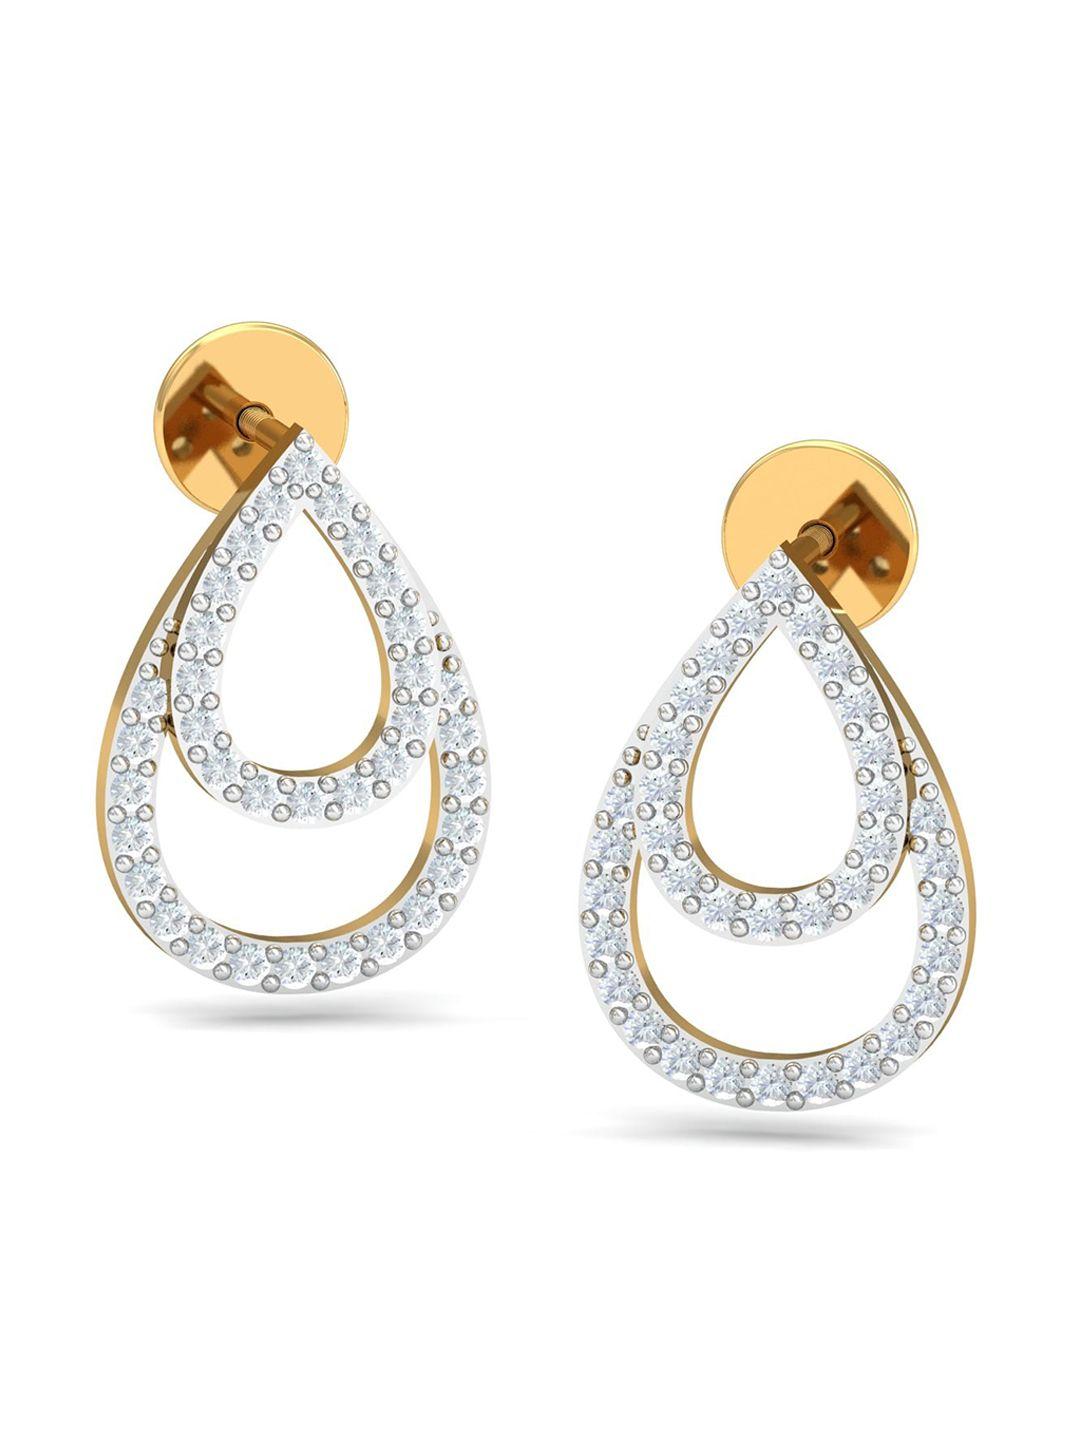 kuberbox-pretty-pear-18kt-gold-diamond-studded-stud-earrings-2.21gm